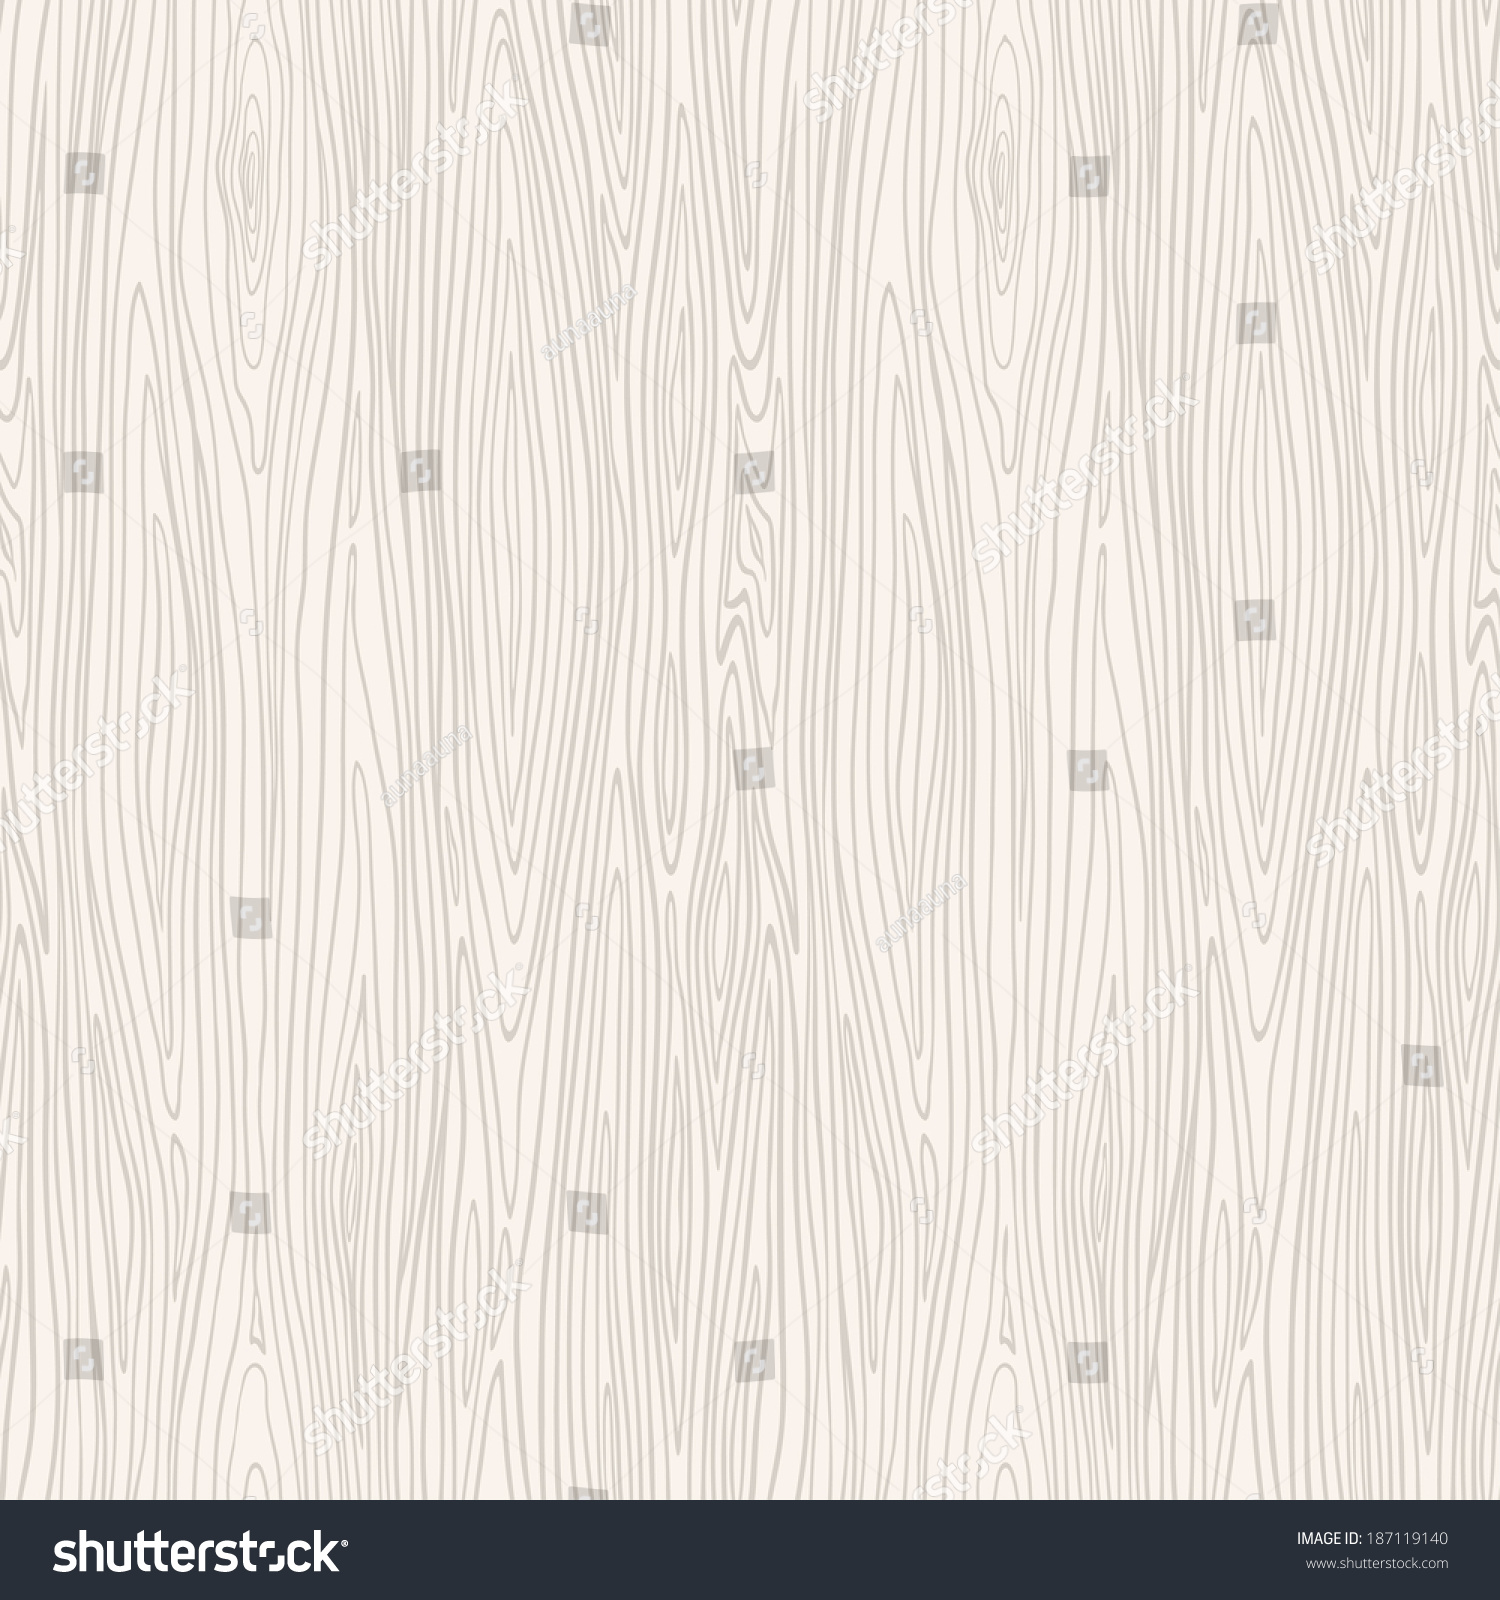 Wood texture template. Seamless pattern. Vector illustration. #187119140